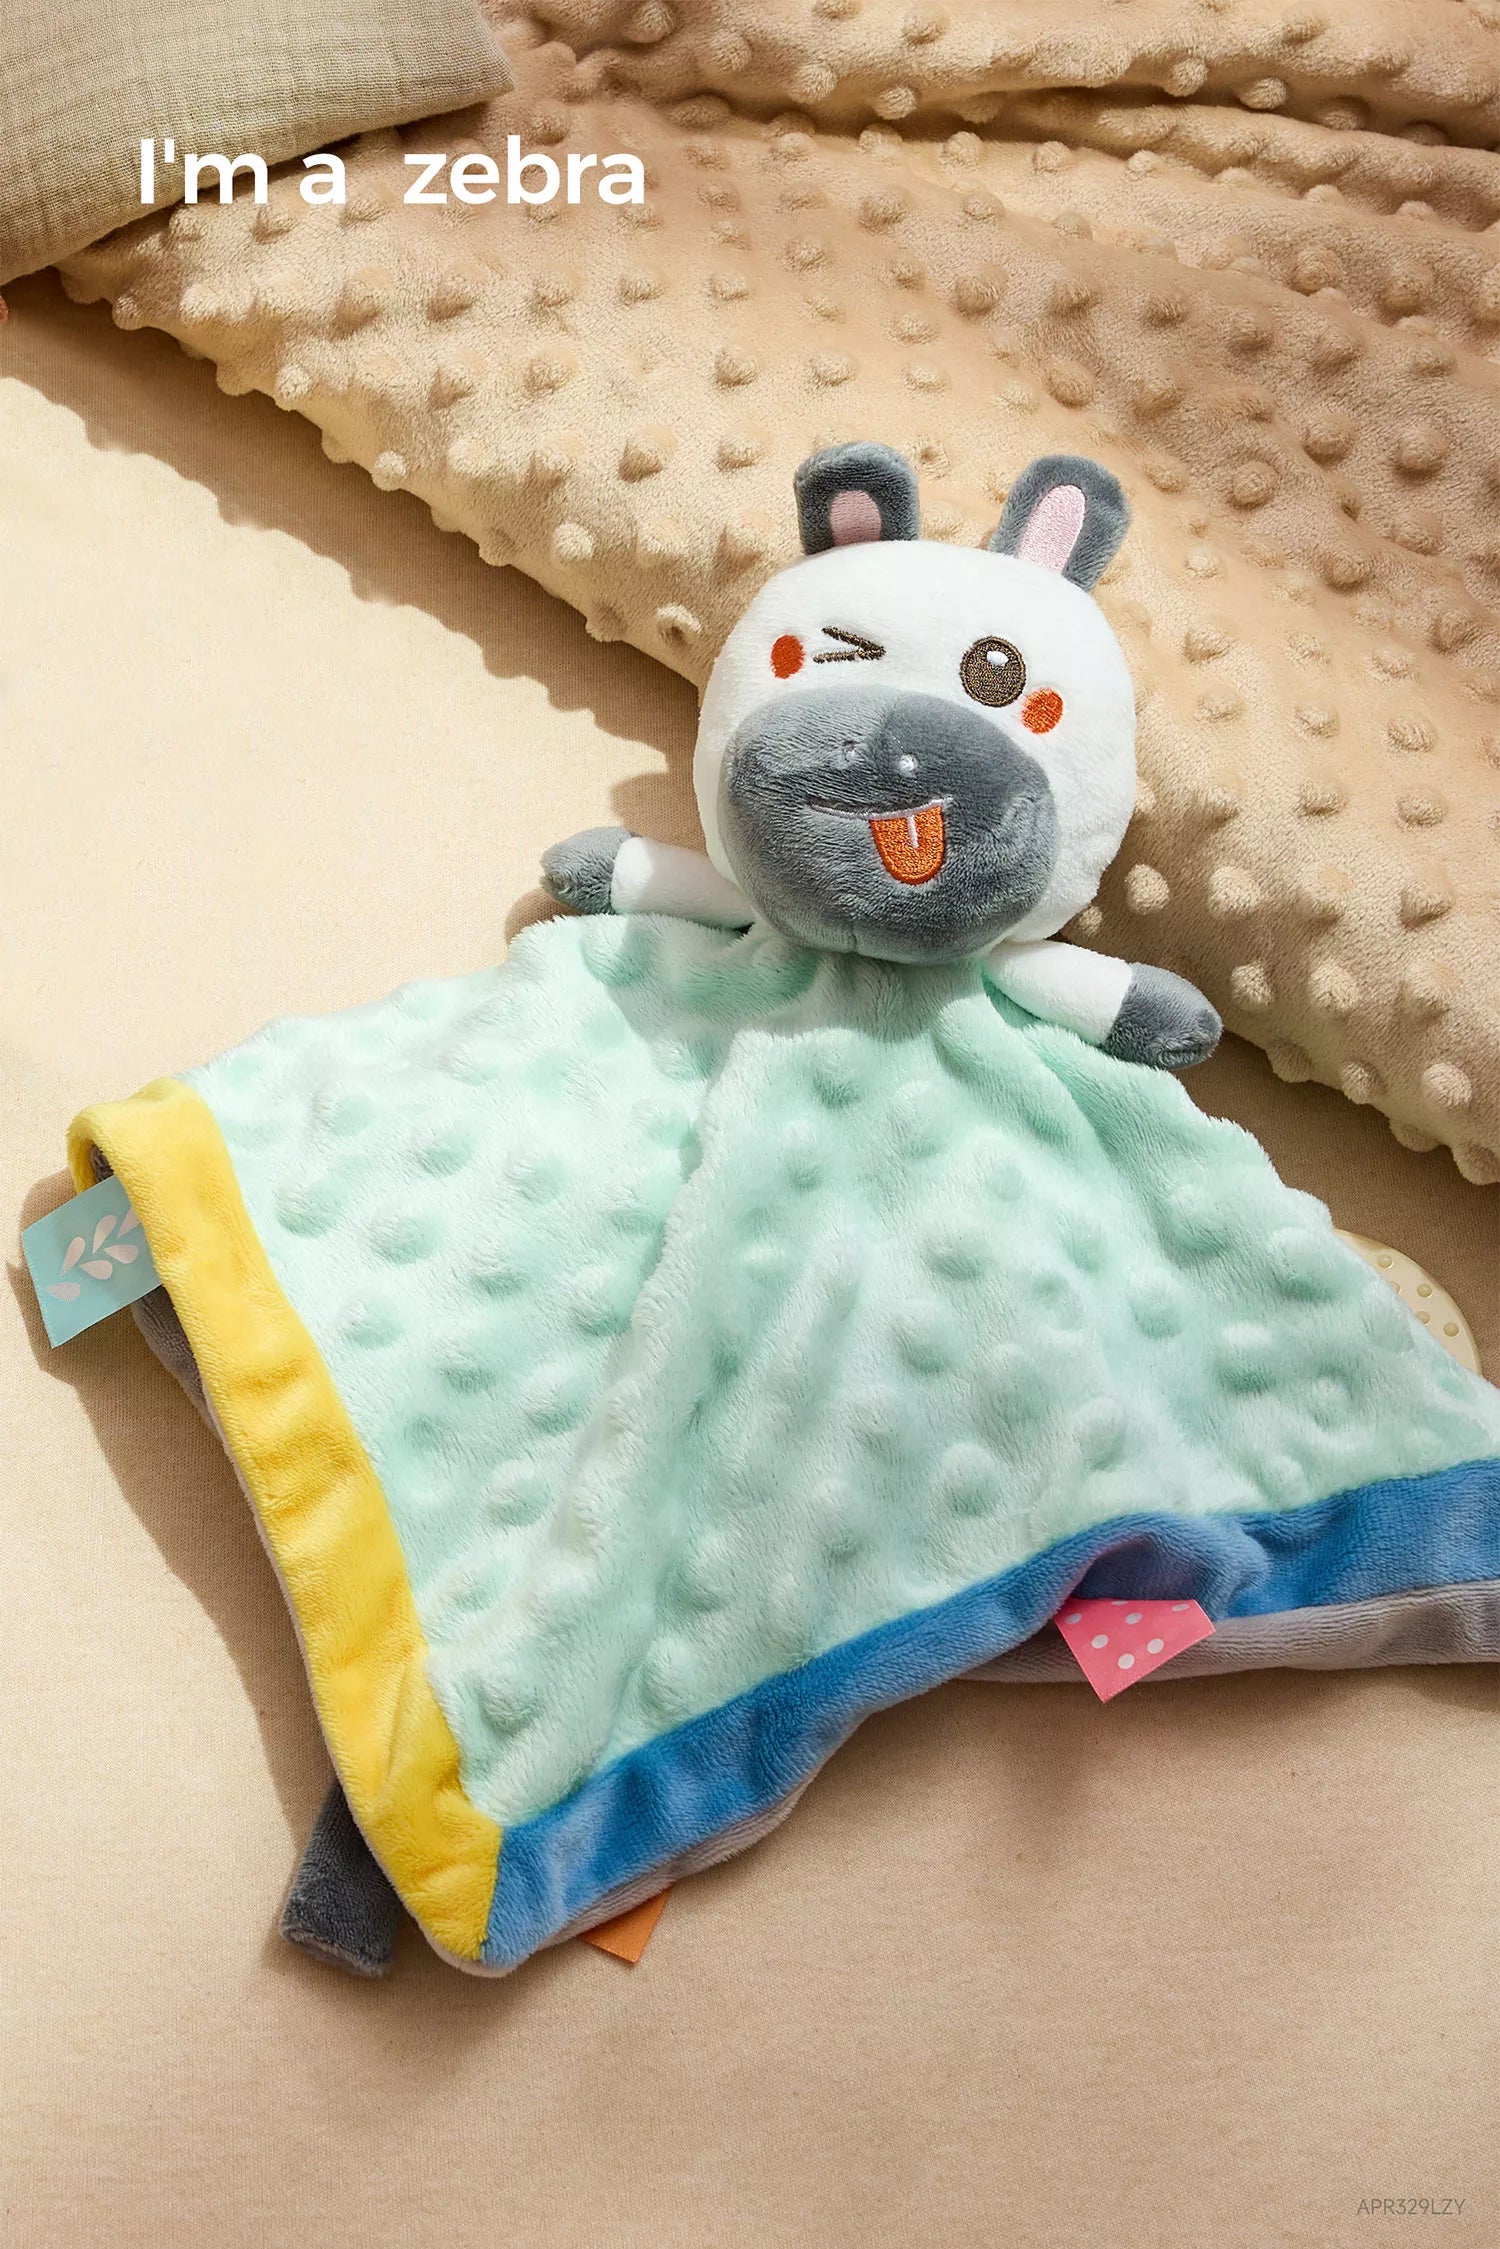 Comfort blanket teething toy for soothing comfort